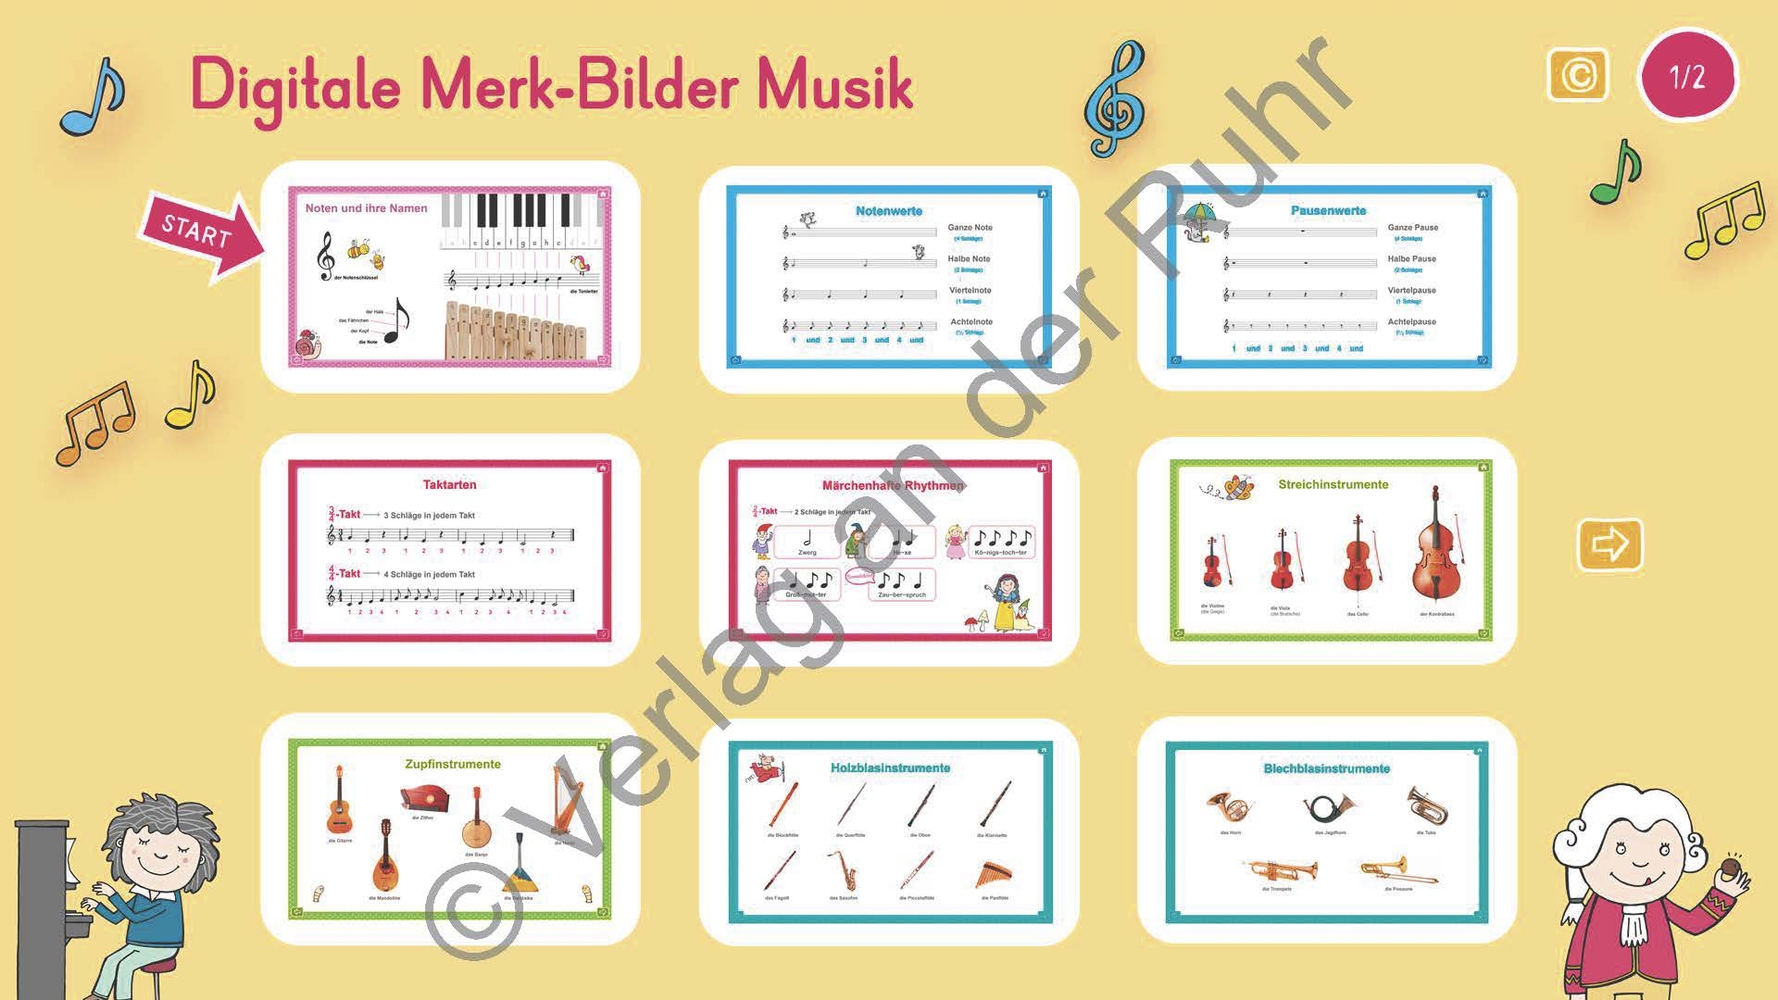 Digitale Merk-Bilder Musik - Premium-Lizenz - Mac